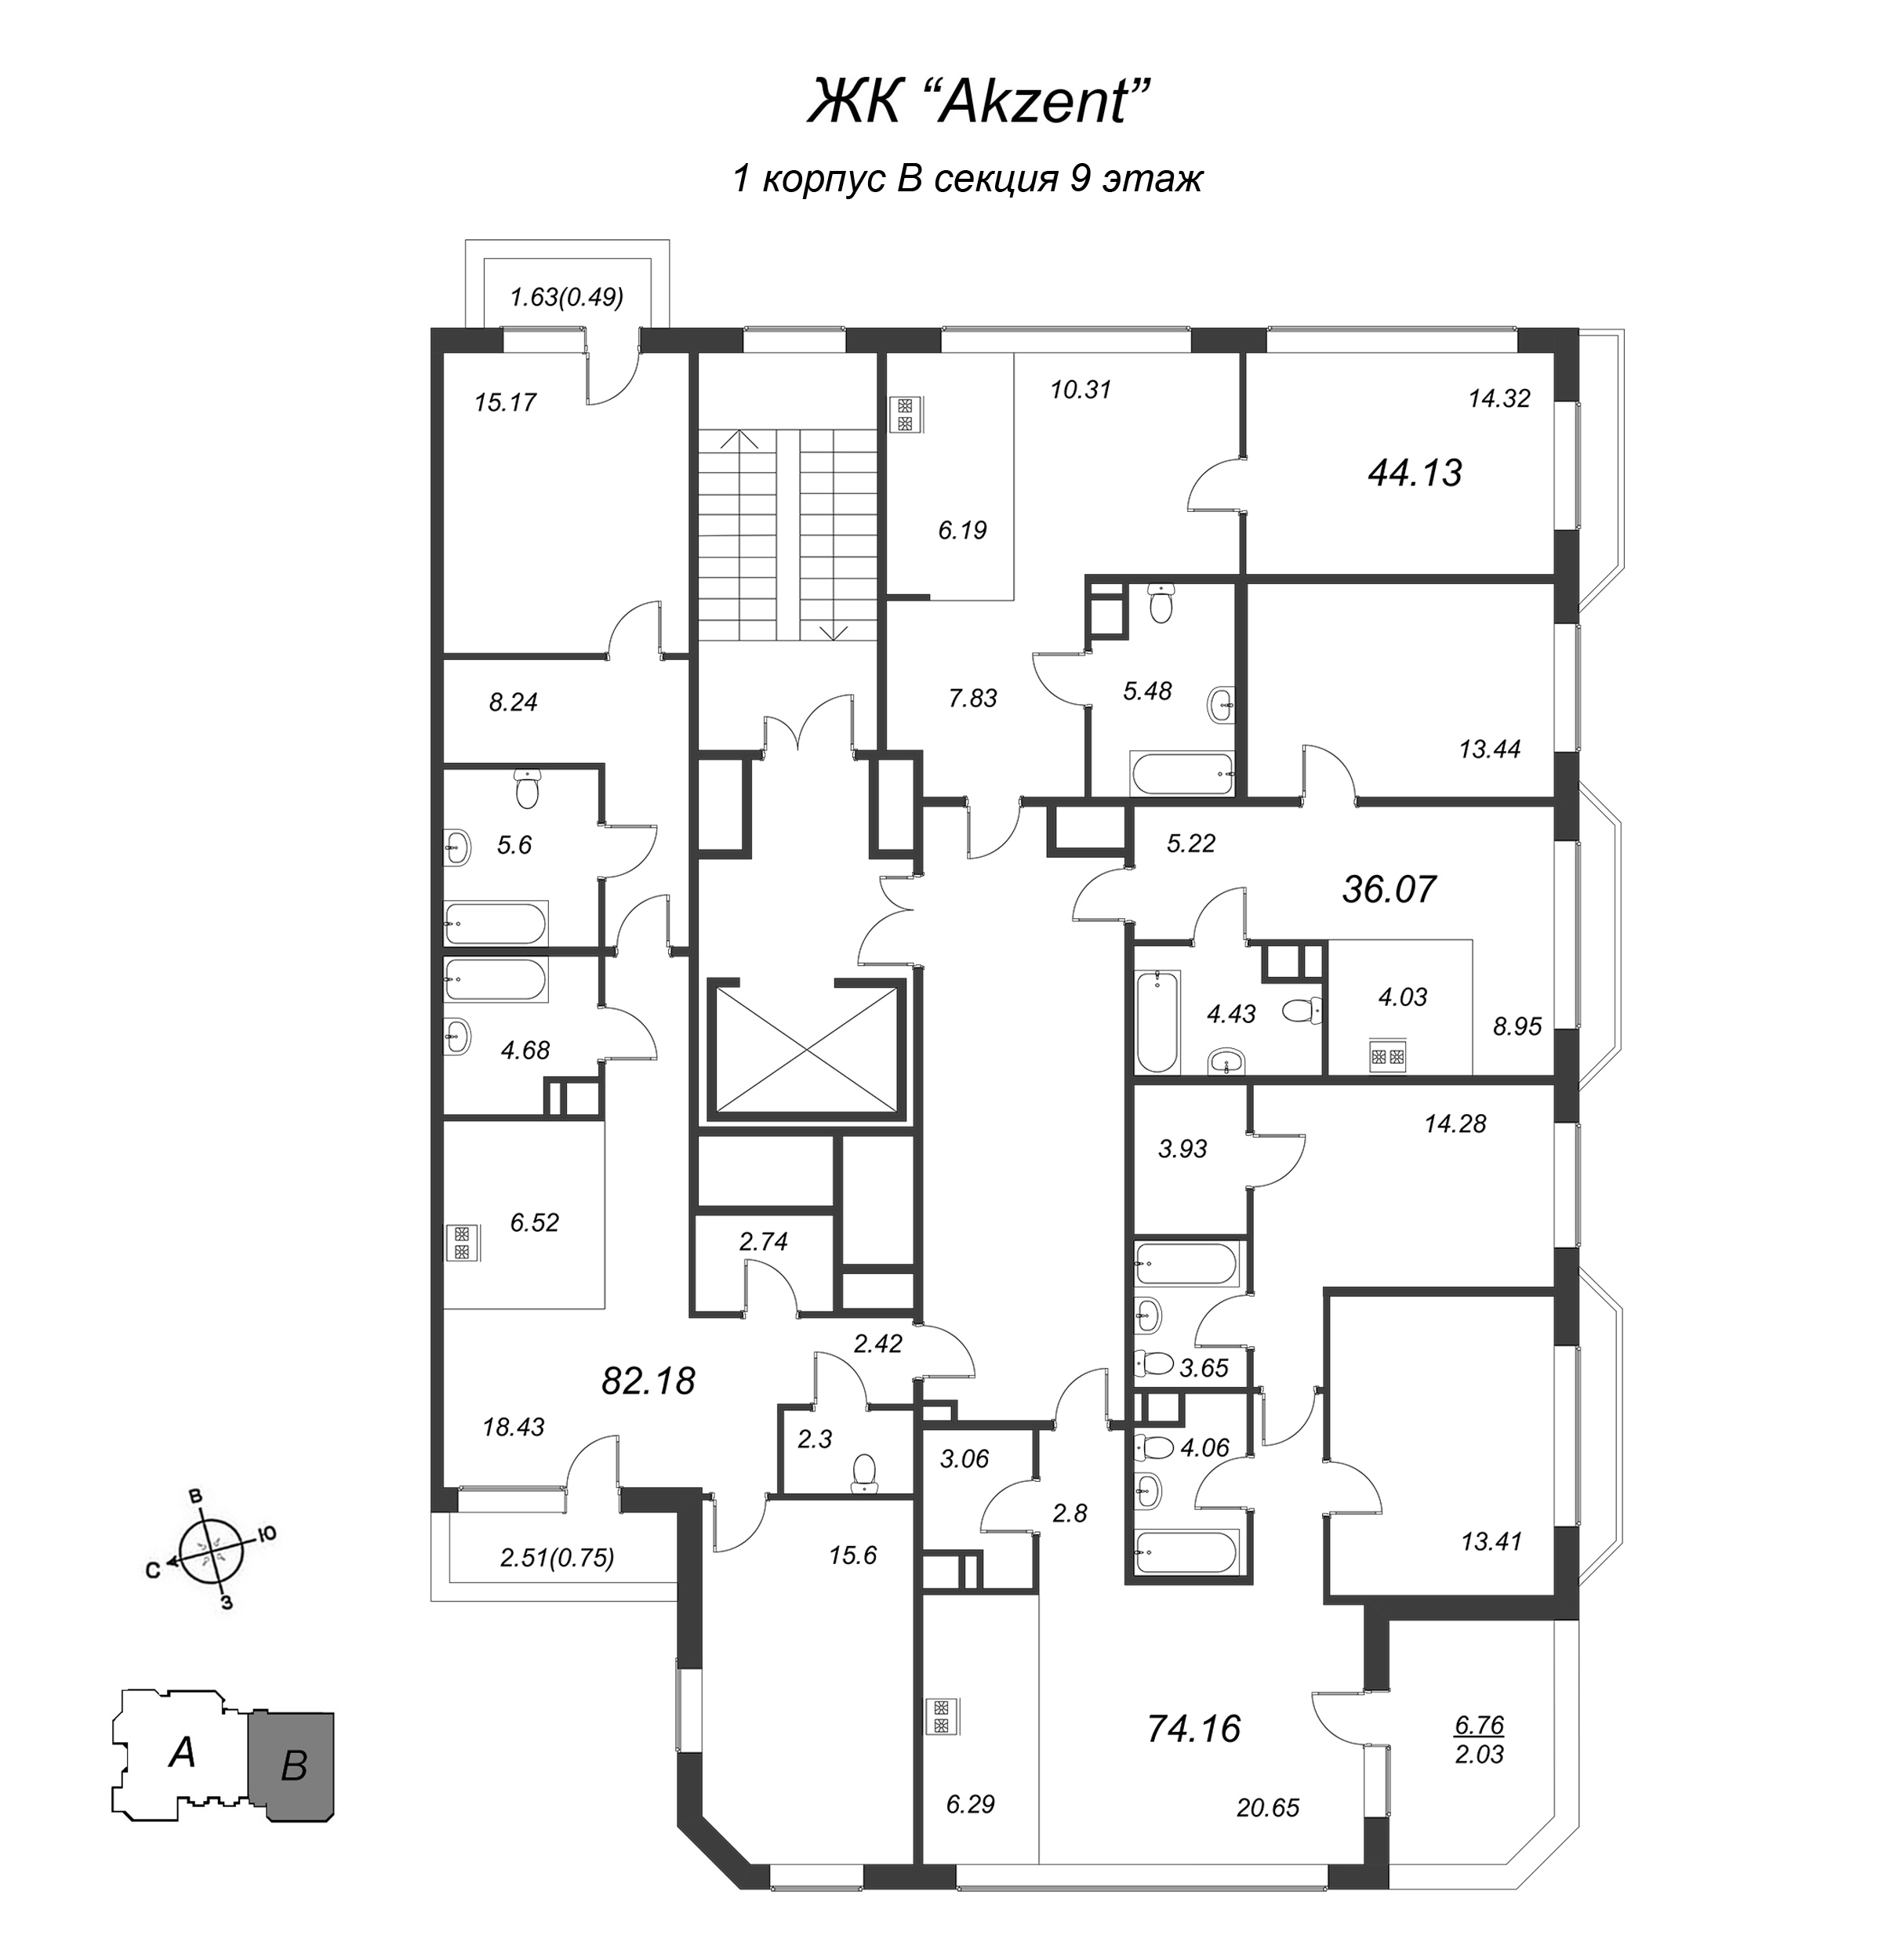 2-комнатная (Евро) квартира, 36.35 м² в ЖК "Akzent" - планировка этажа